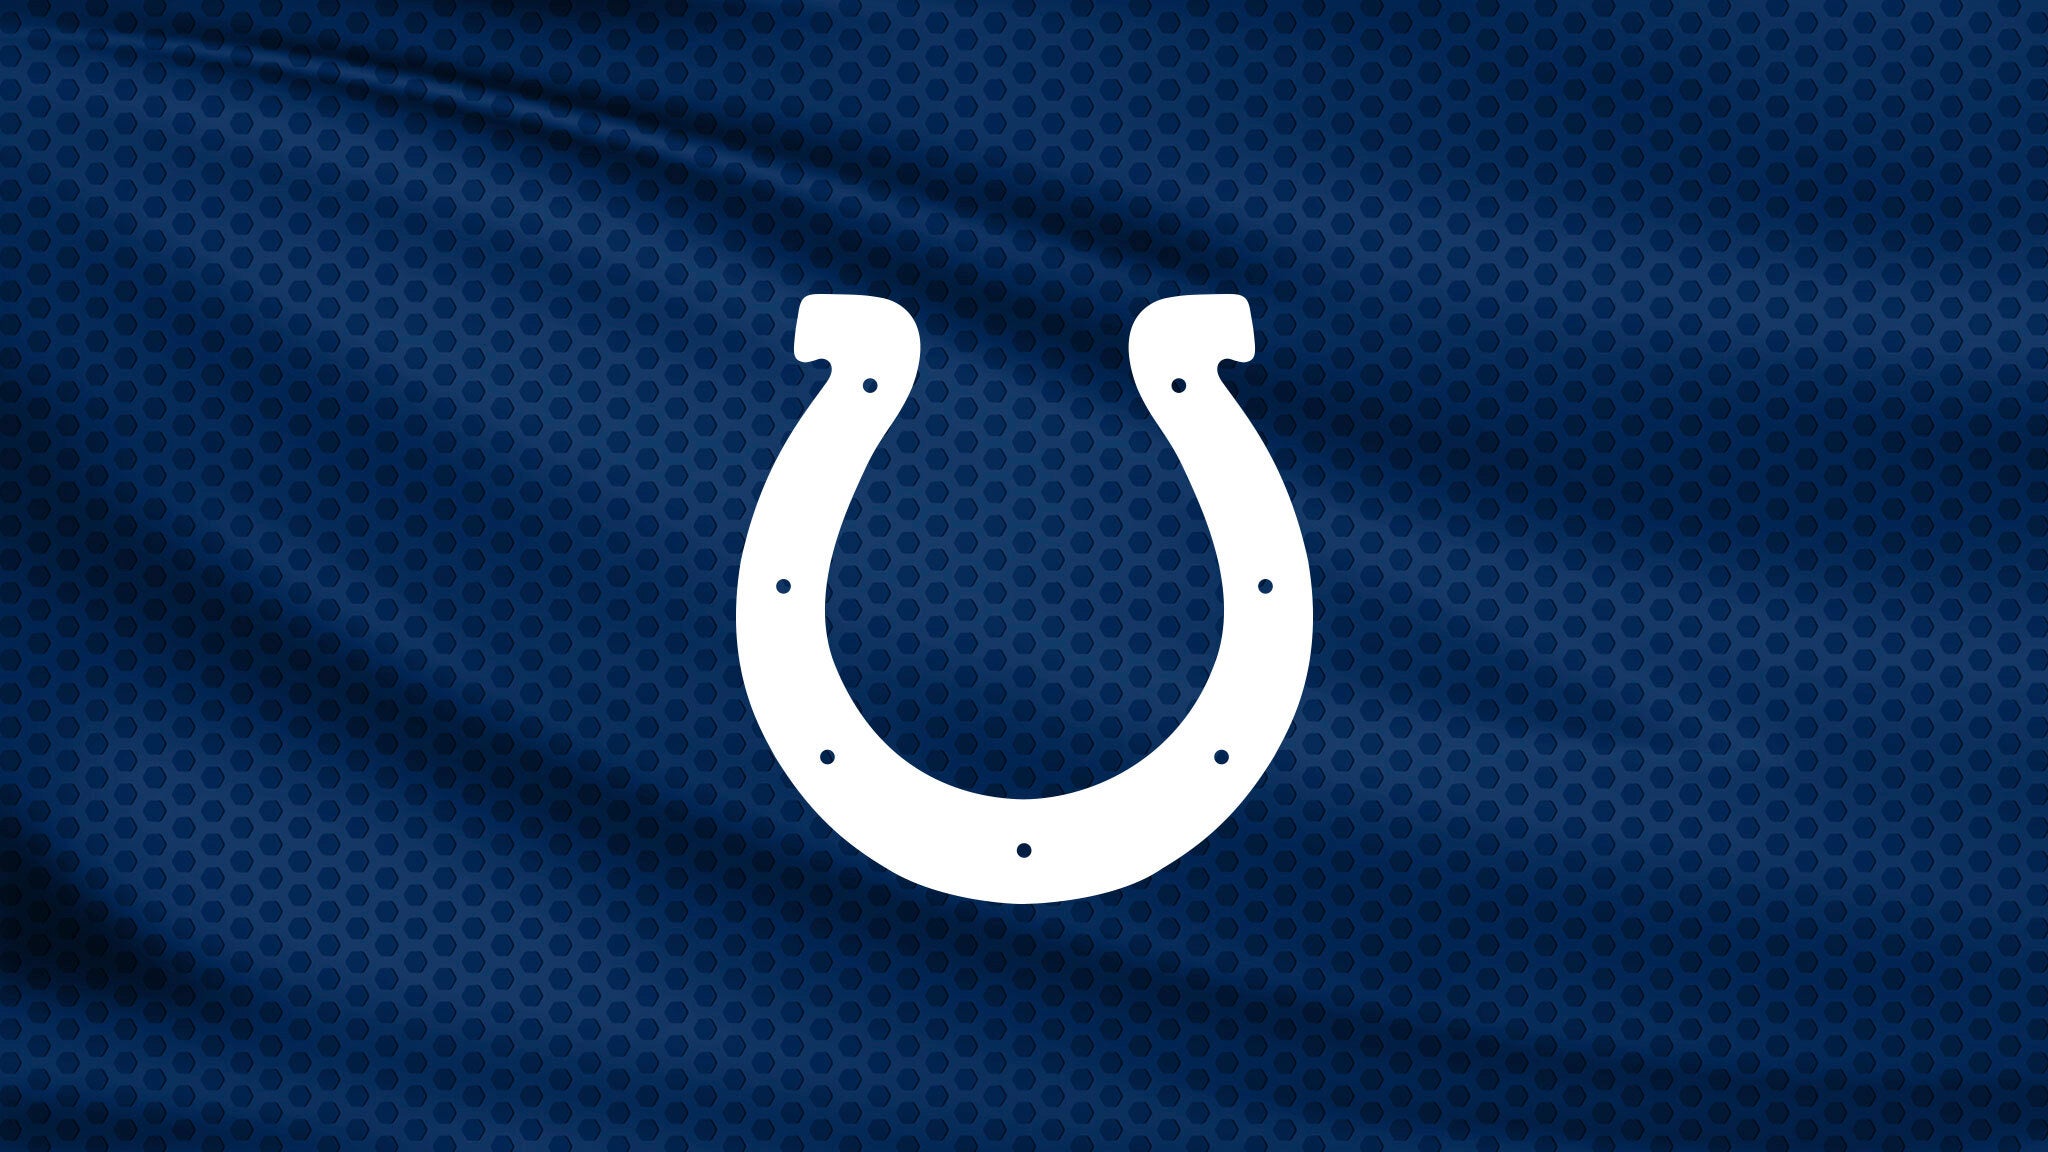 Indianapolis Colts V Denver Broncos - Preseason Game hero